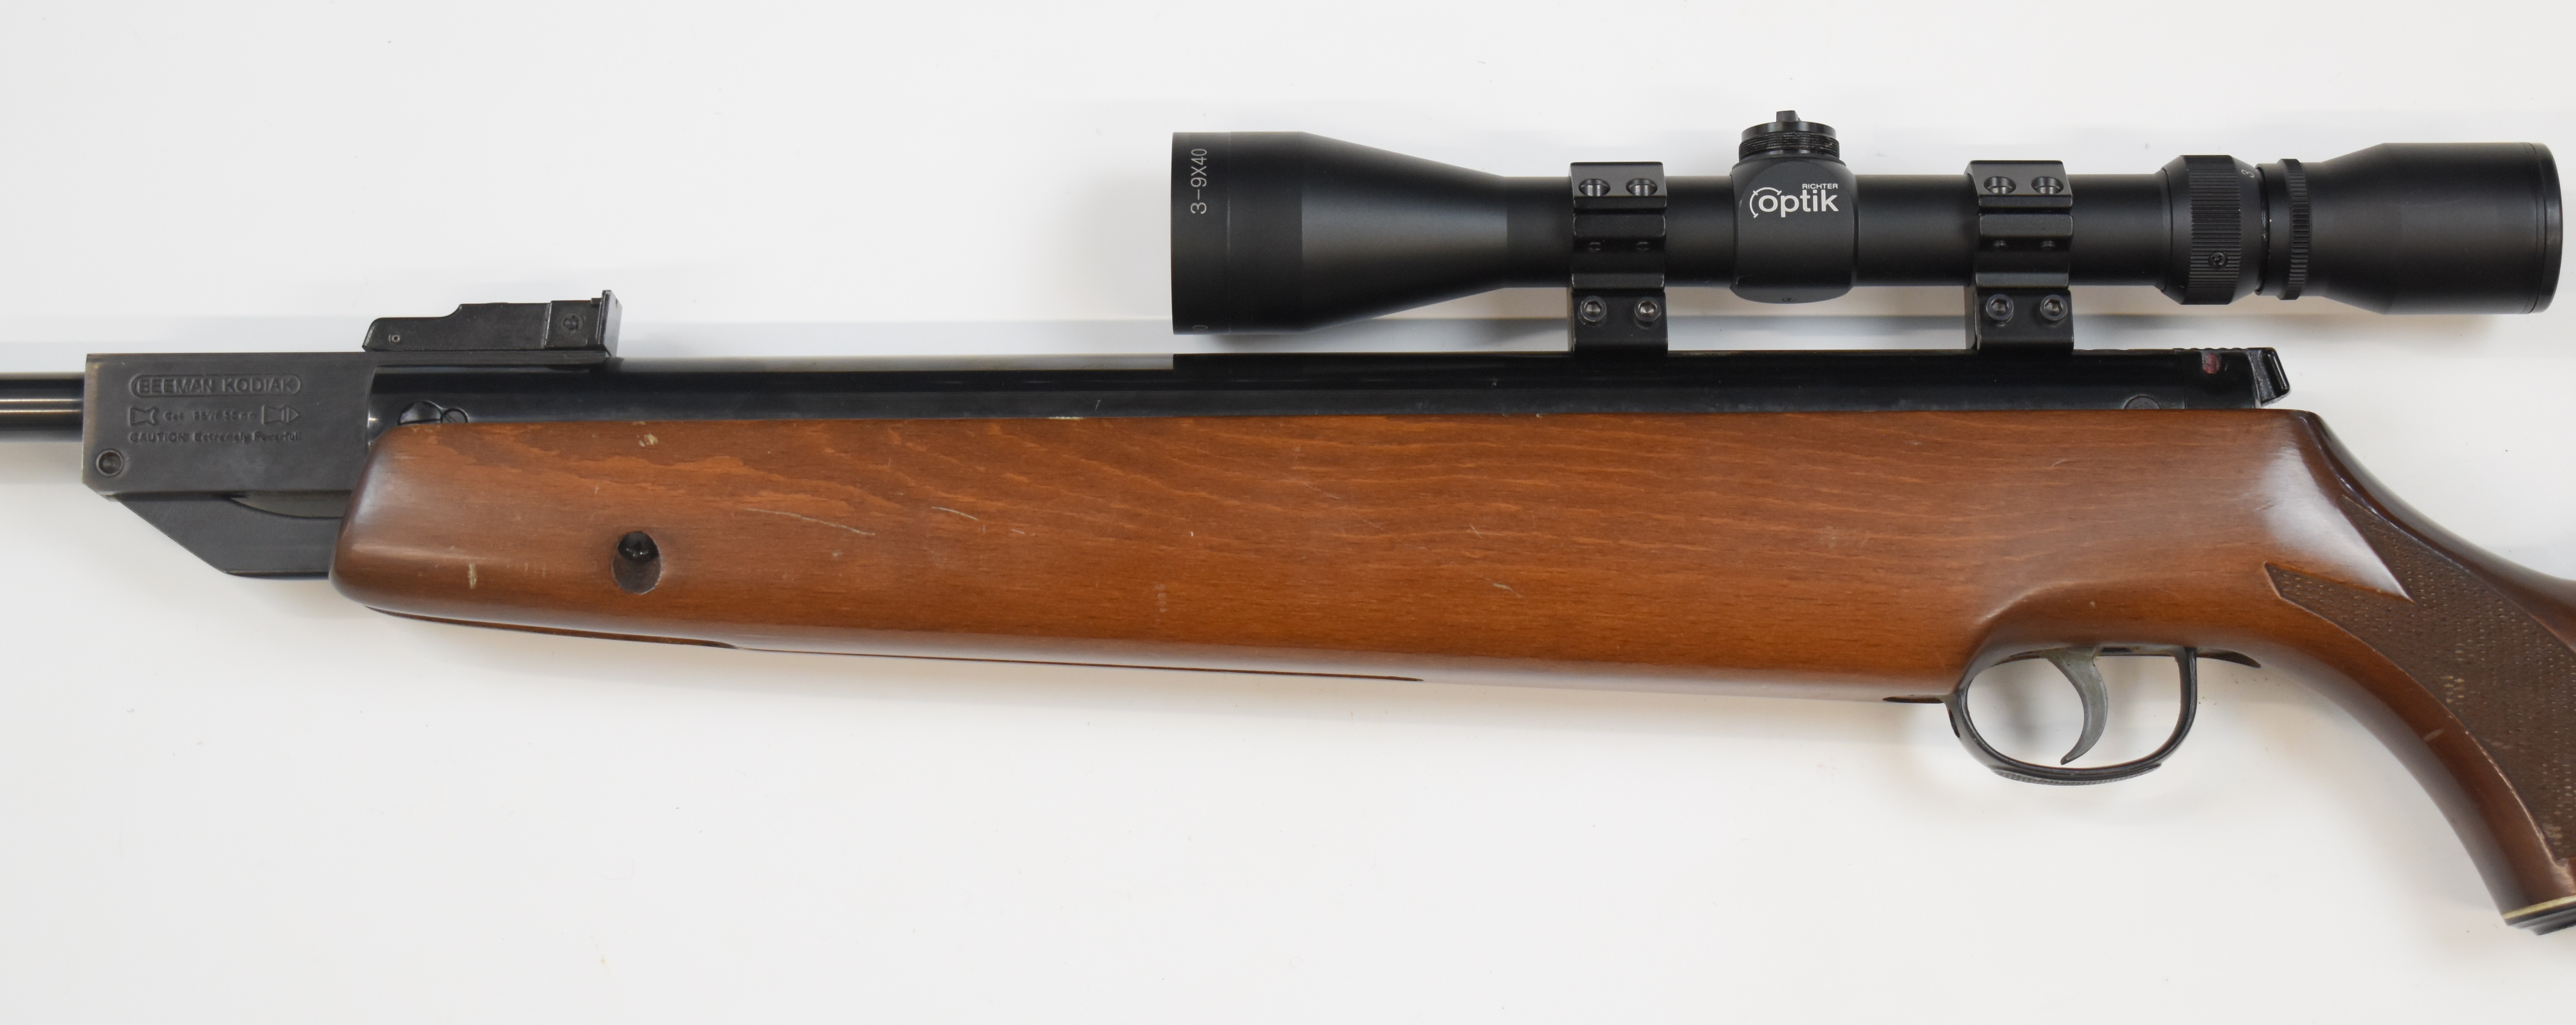 Beeman Kodiak .25 FAC air rifle with chequered semi-pistol grip, raised cheek piece, adjustable - Image 8 of 10